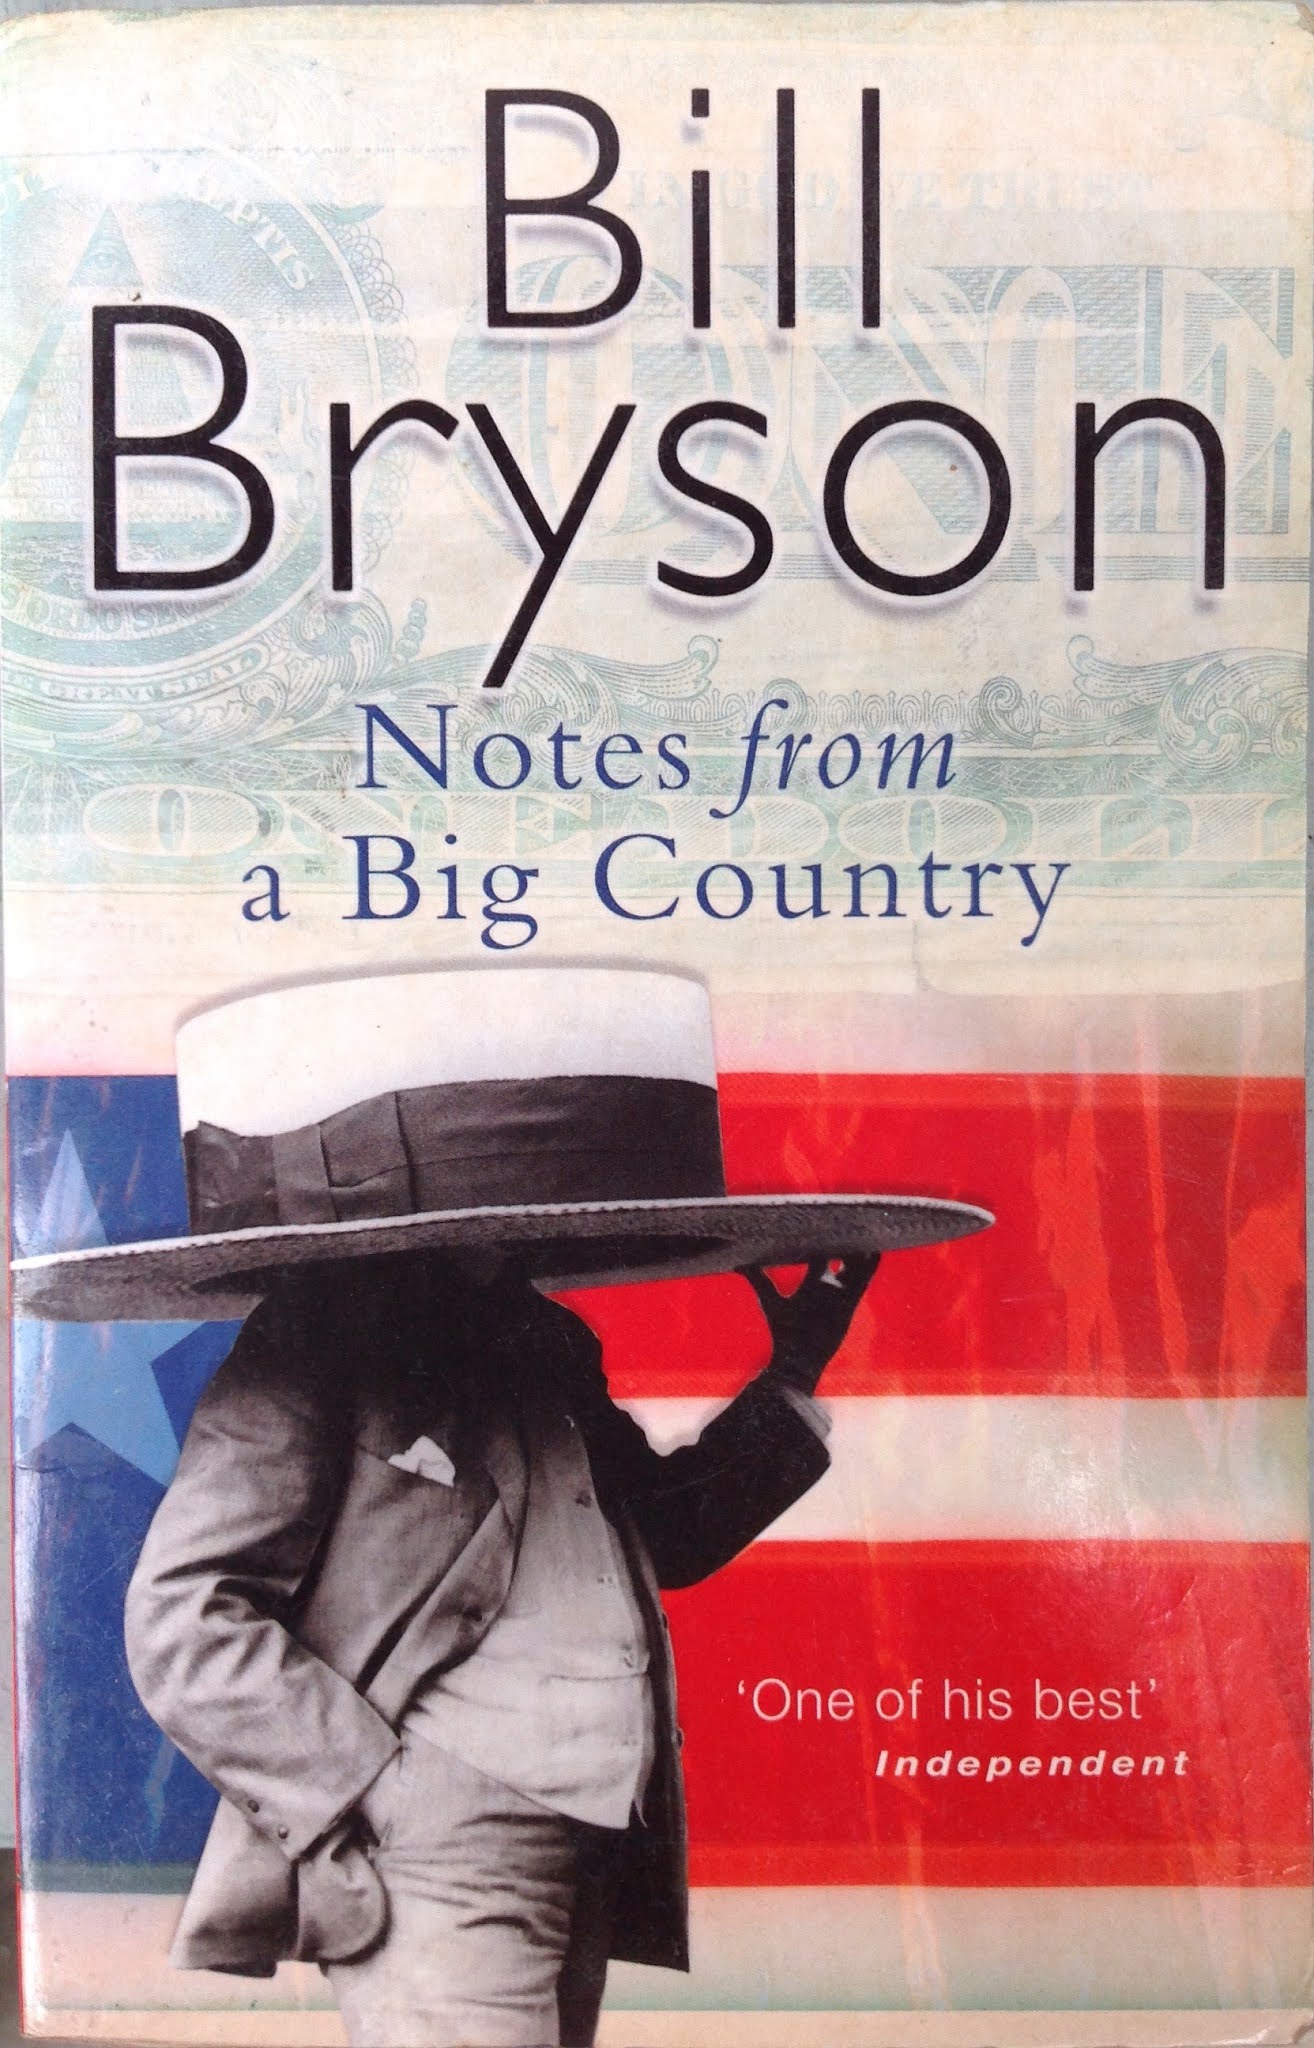 Country bill. Билл Брайсон книги. Notes from a big Country. Билл Кантри. Билл Брайсон сделано в Америке.